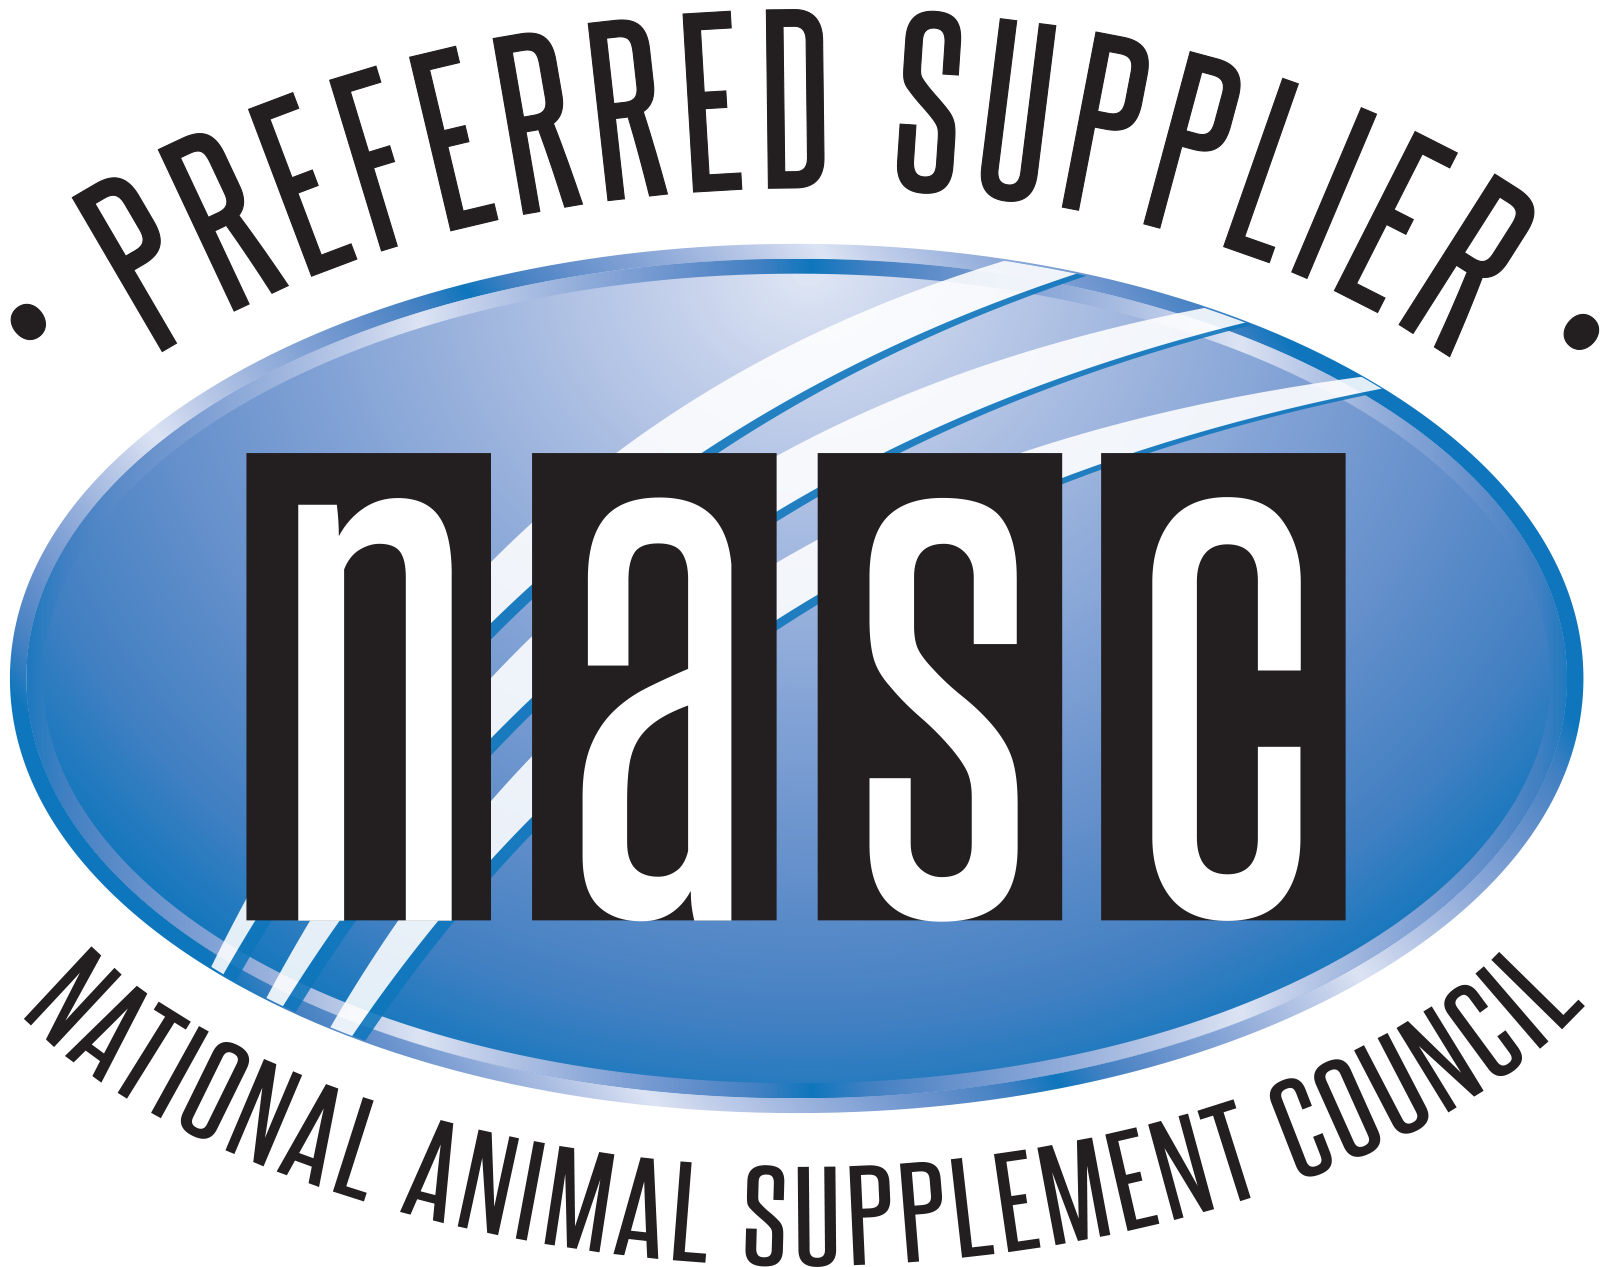 Preferred Supplier NASC